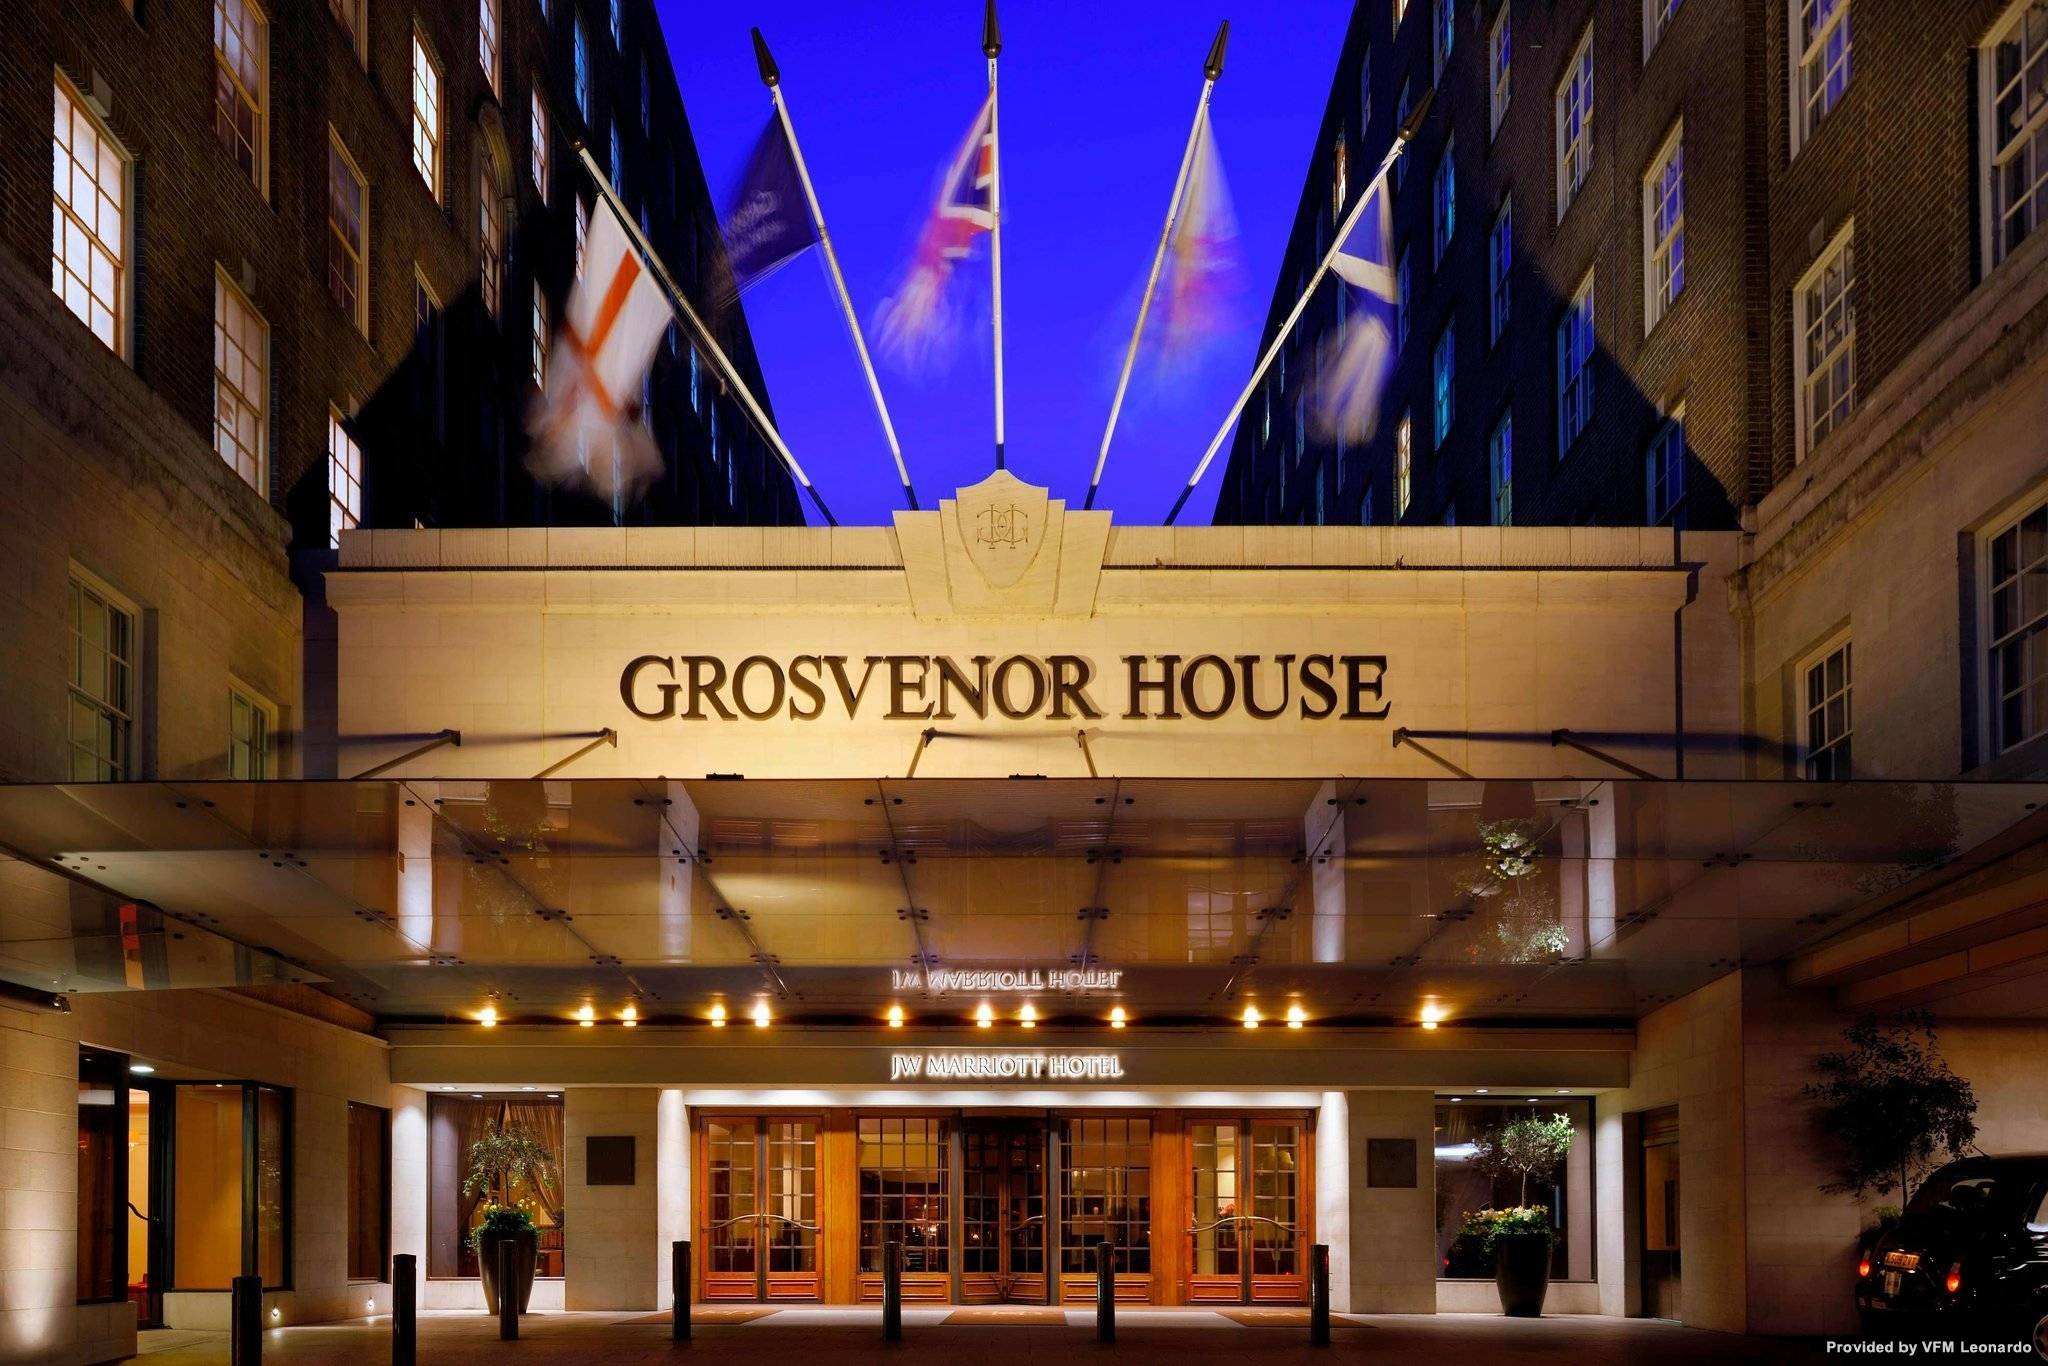 Grosvenor House Hotel London. Luxury 5 Star Family-Friendly Hotel.